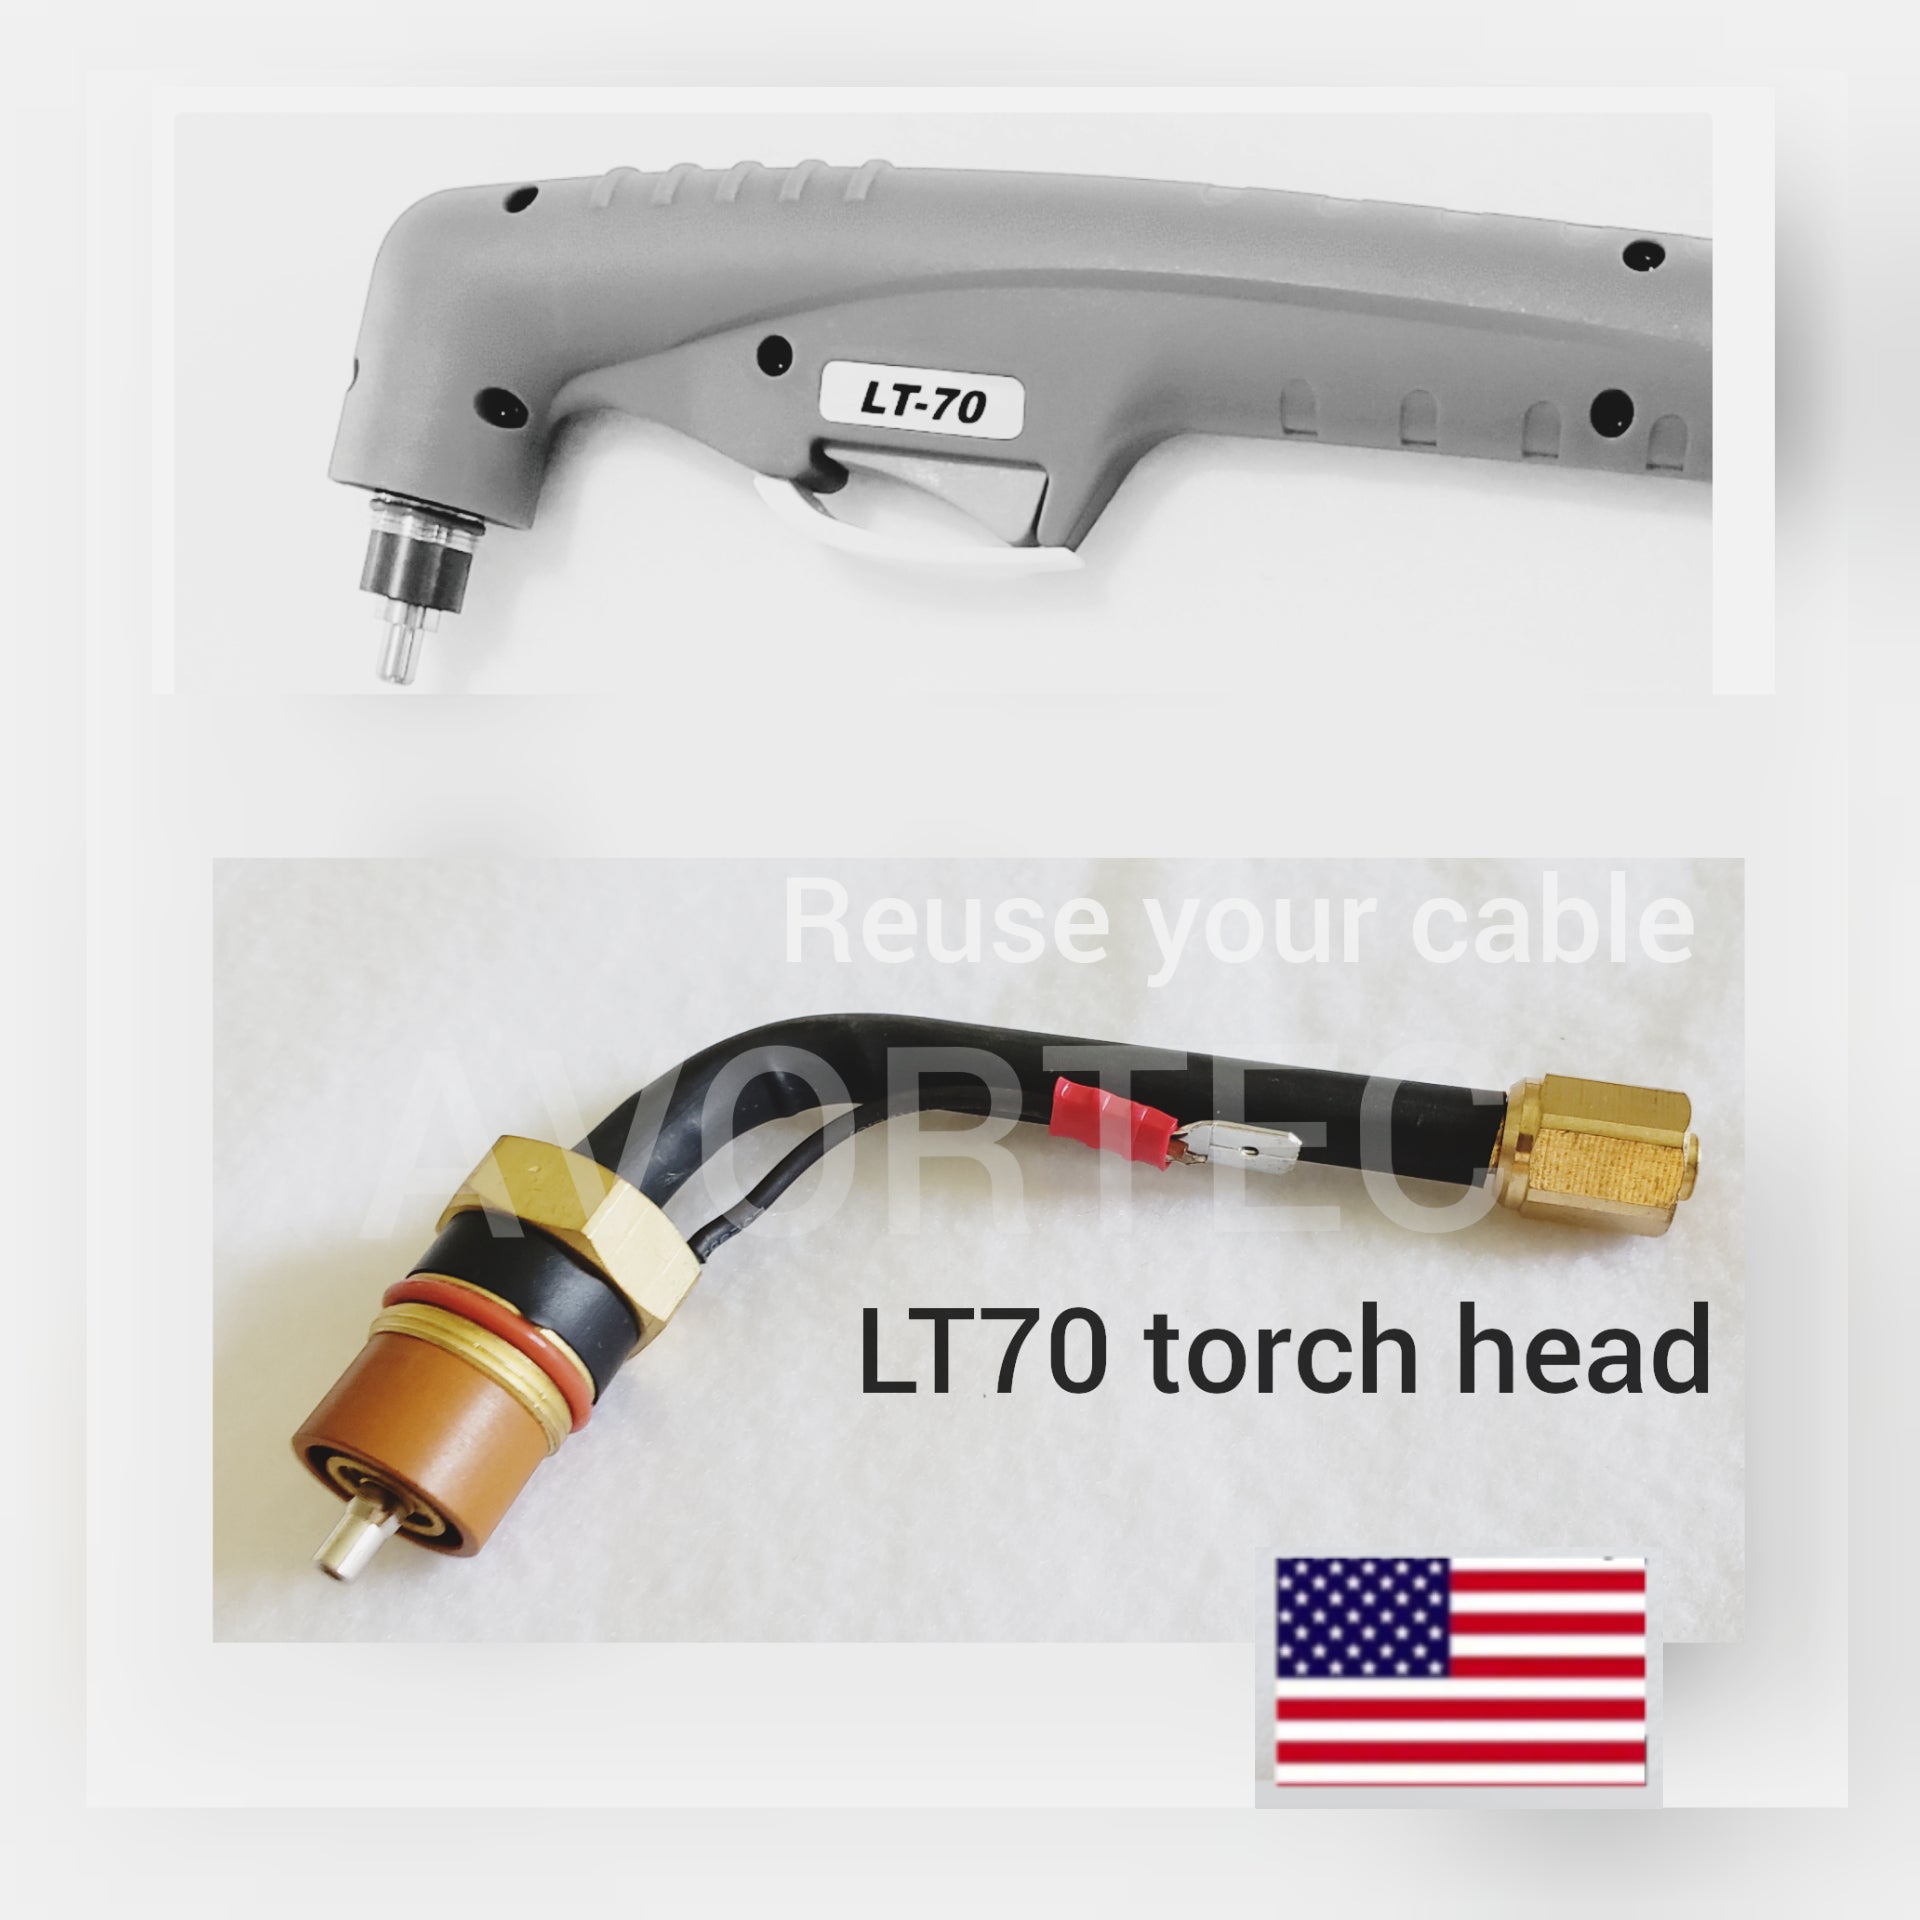 Plasma torch LT70 torch head